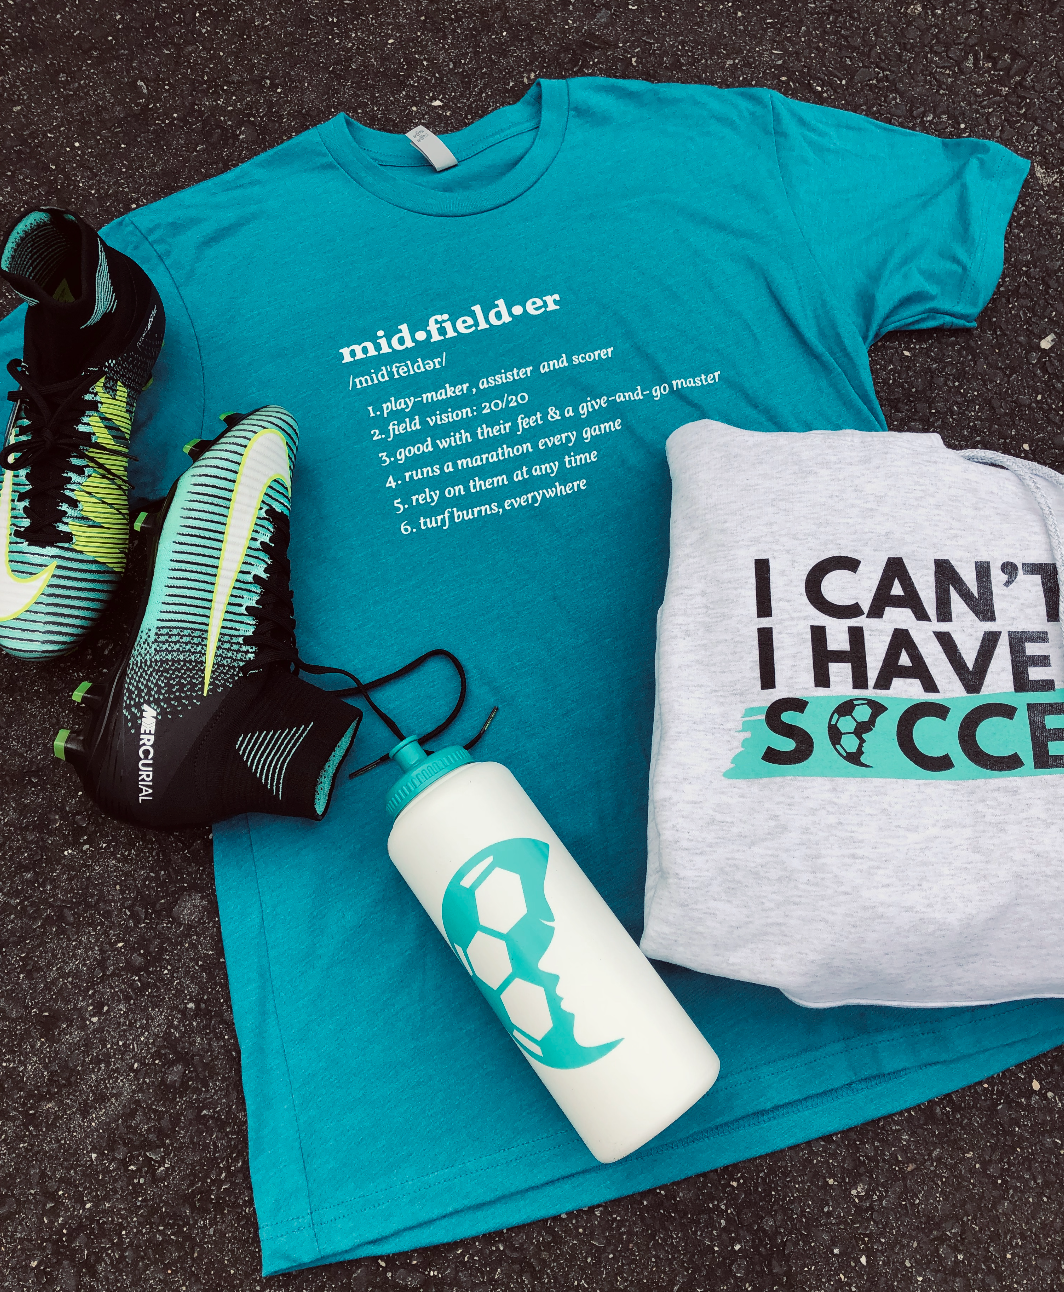 Midfielder Definition T-Shirt - soccergrlprobs